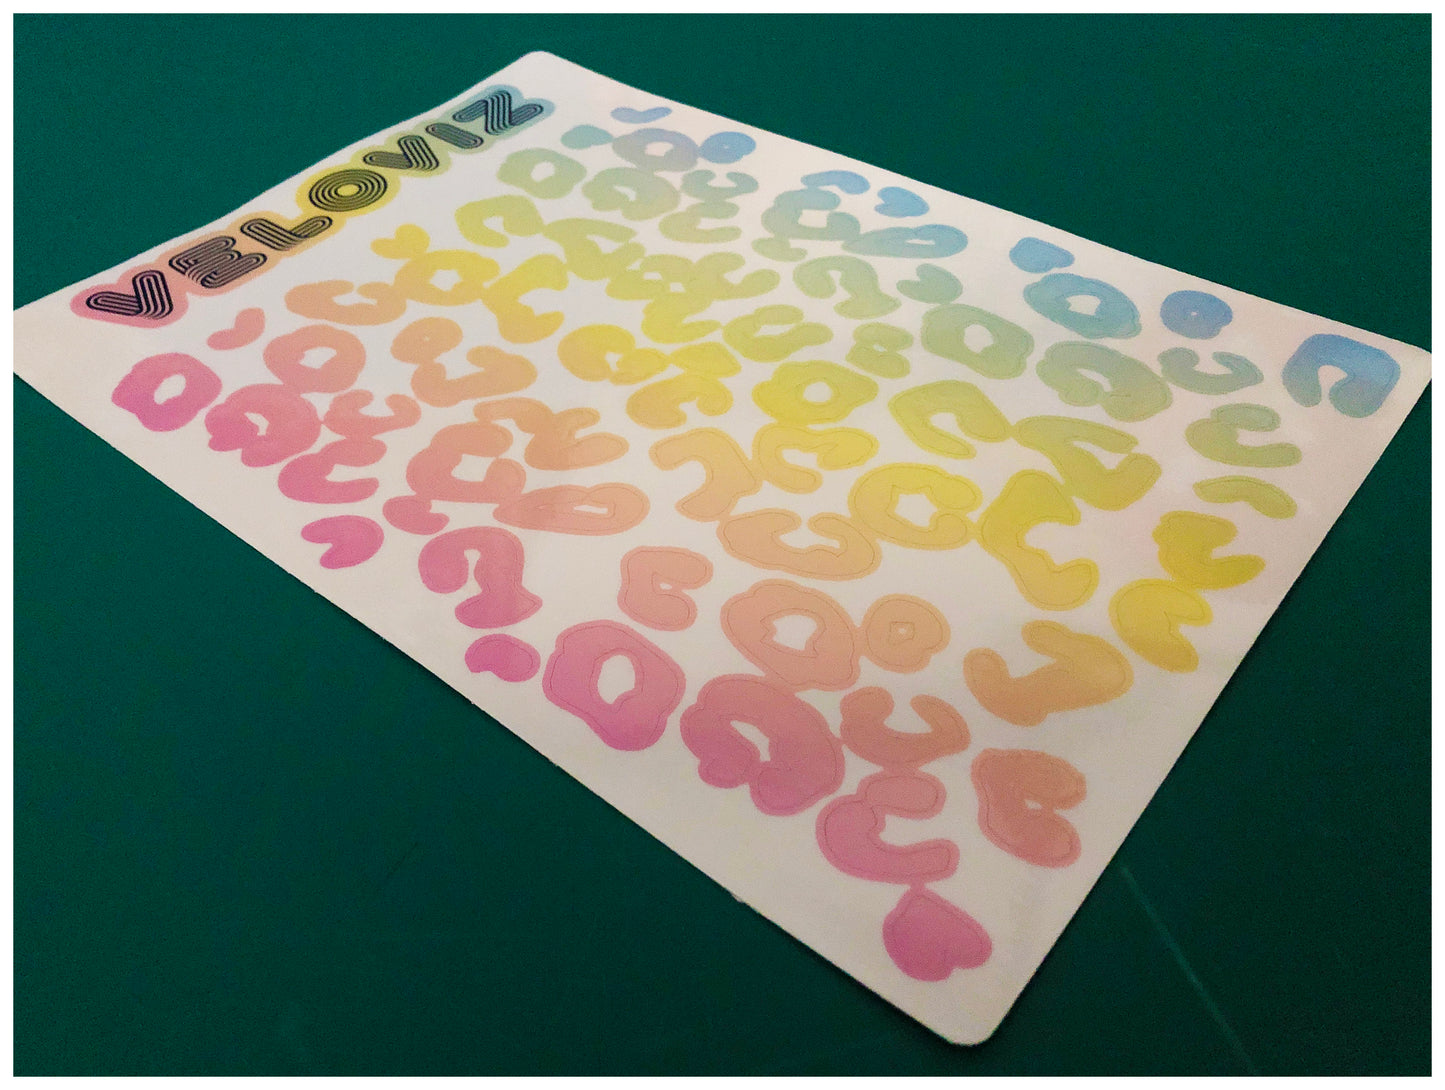 Reflective Leopard Print A4 Cargo Bike Stickers - Pastel Fade